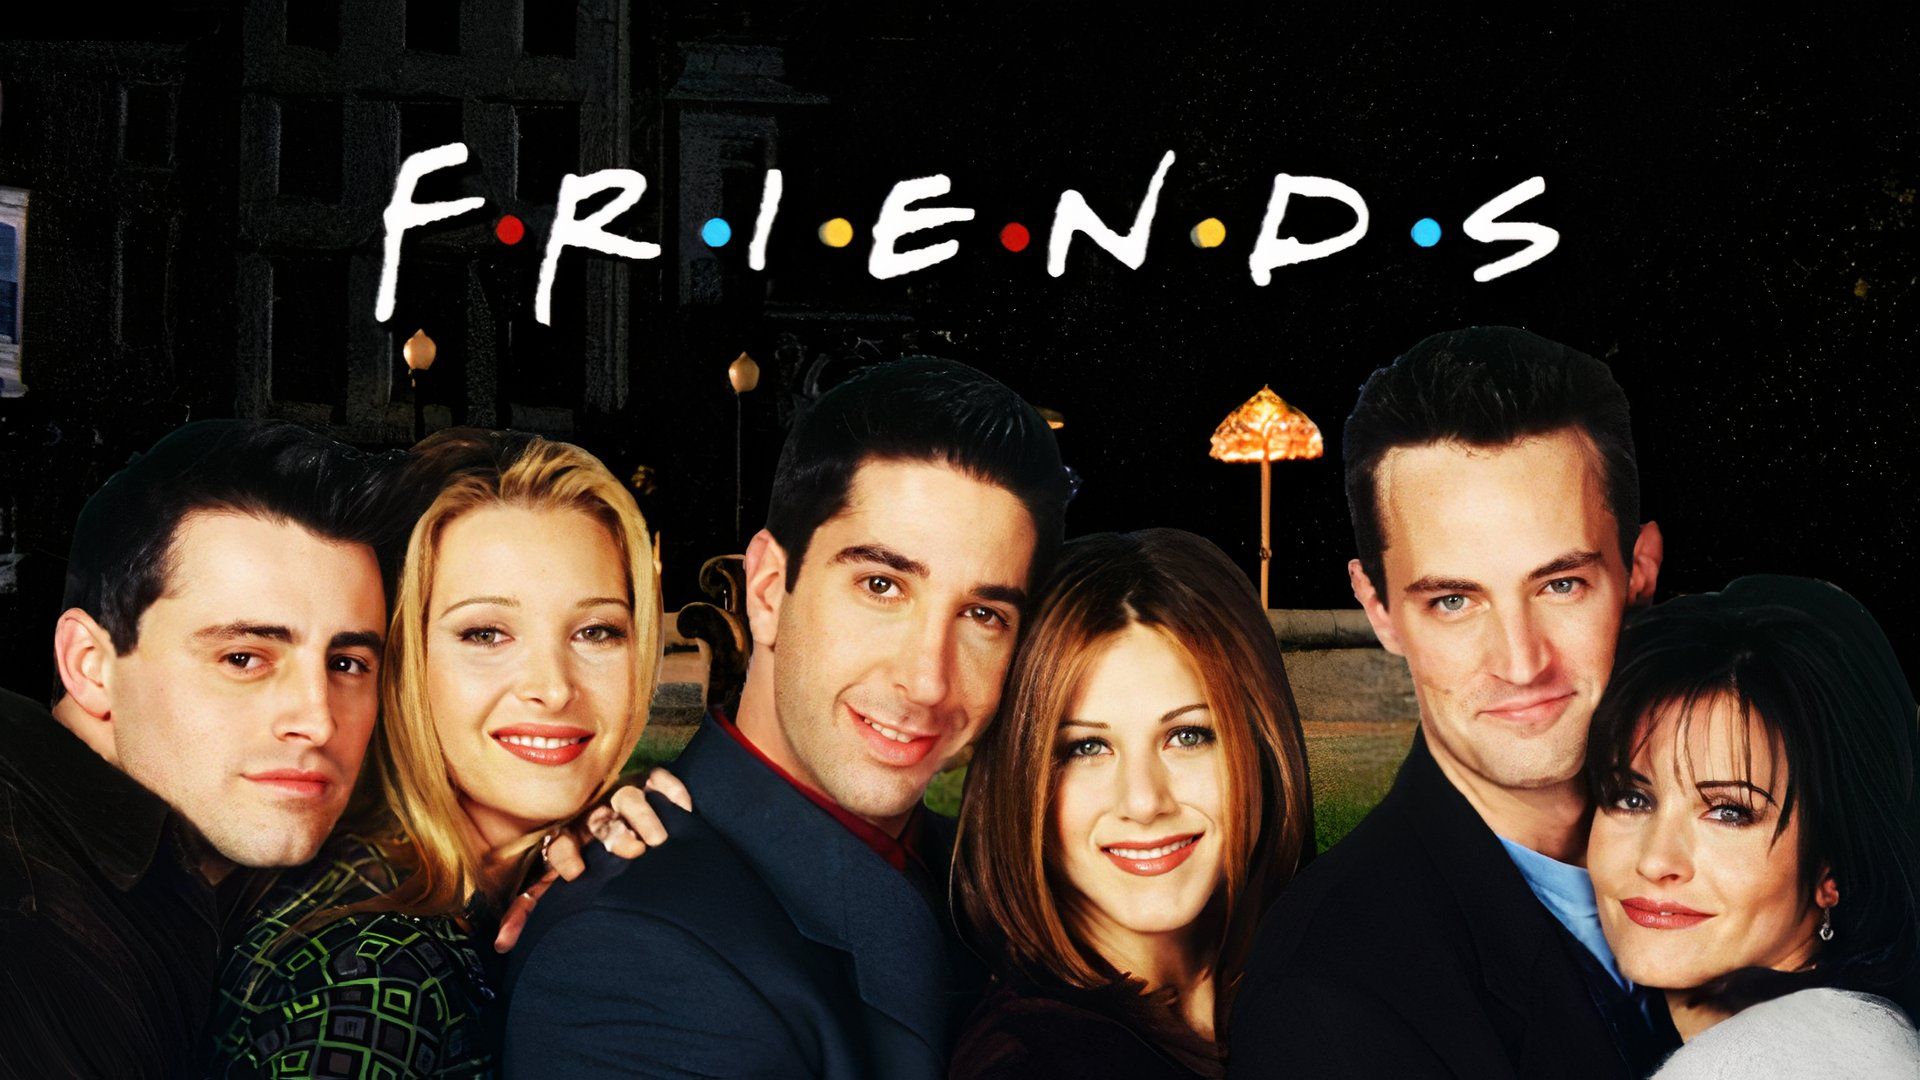 Matt LeBlanc, Lisa Kudrow, David Schwimmer, Jennifer Aniston, Matthew Perry, and Courtney Cox in Friends